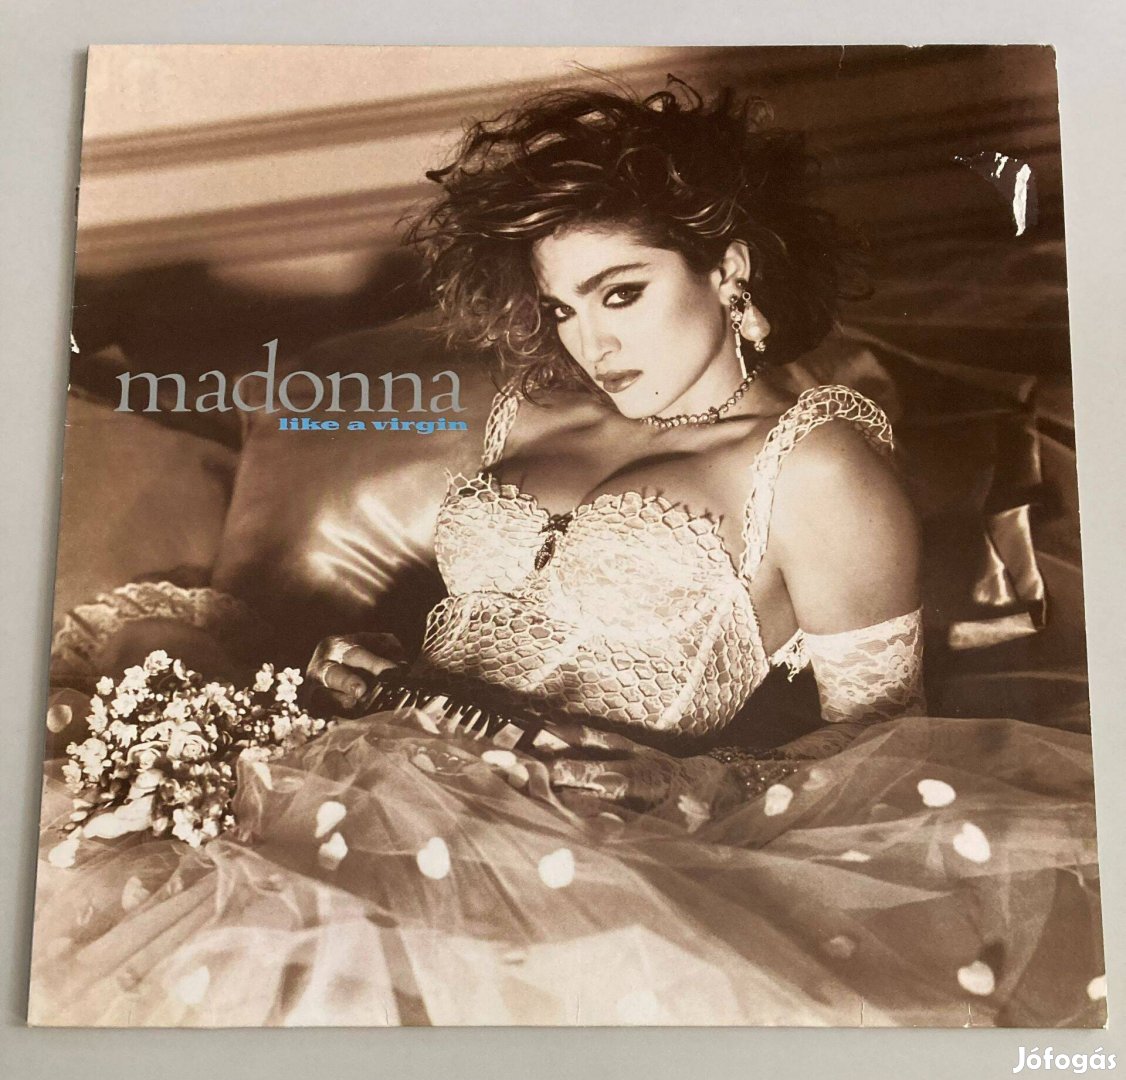 Madonna - Like a Virgin (német)